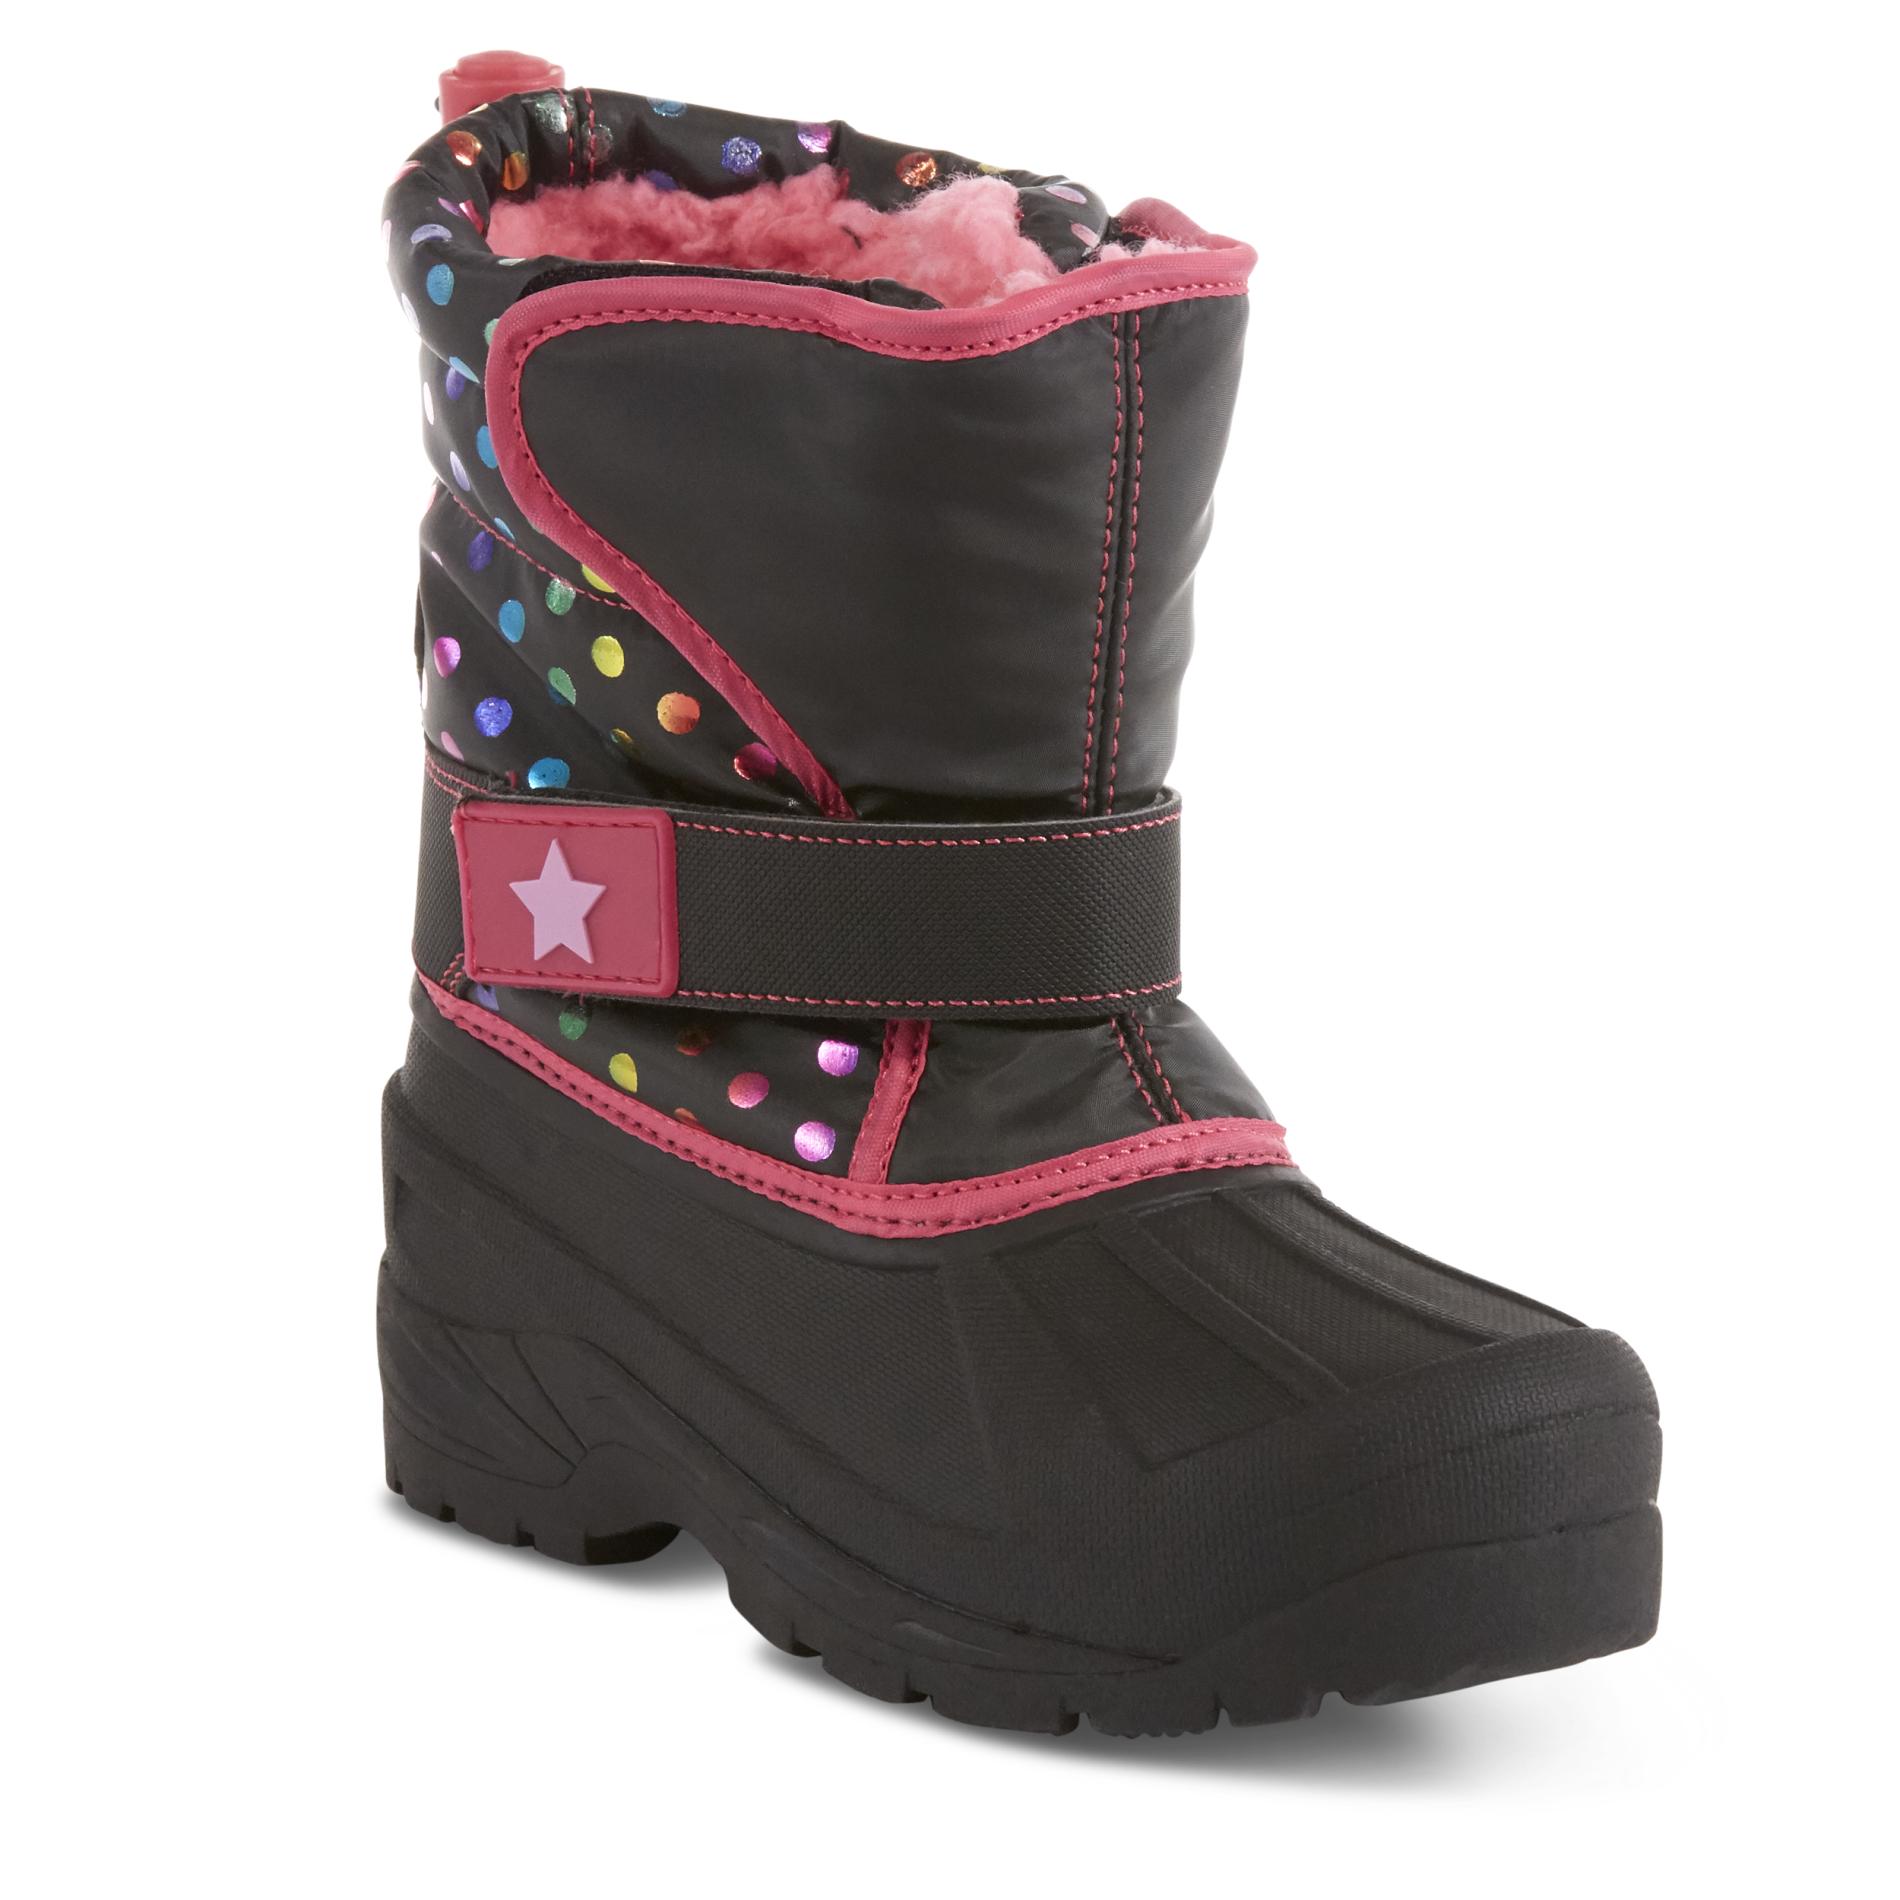 kmart snow boots